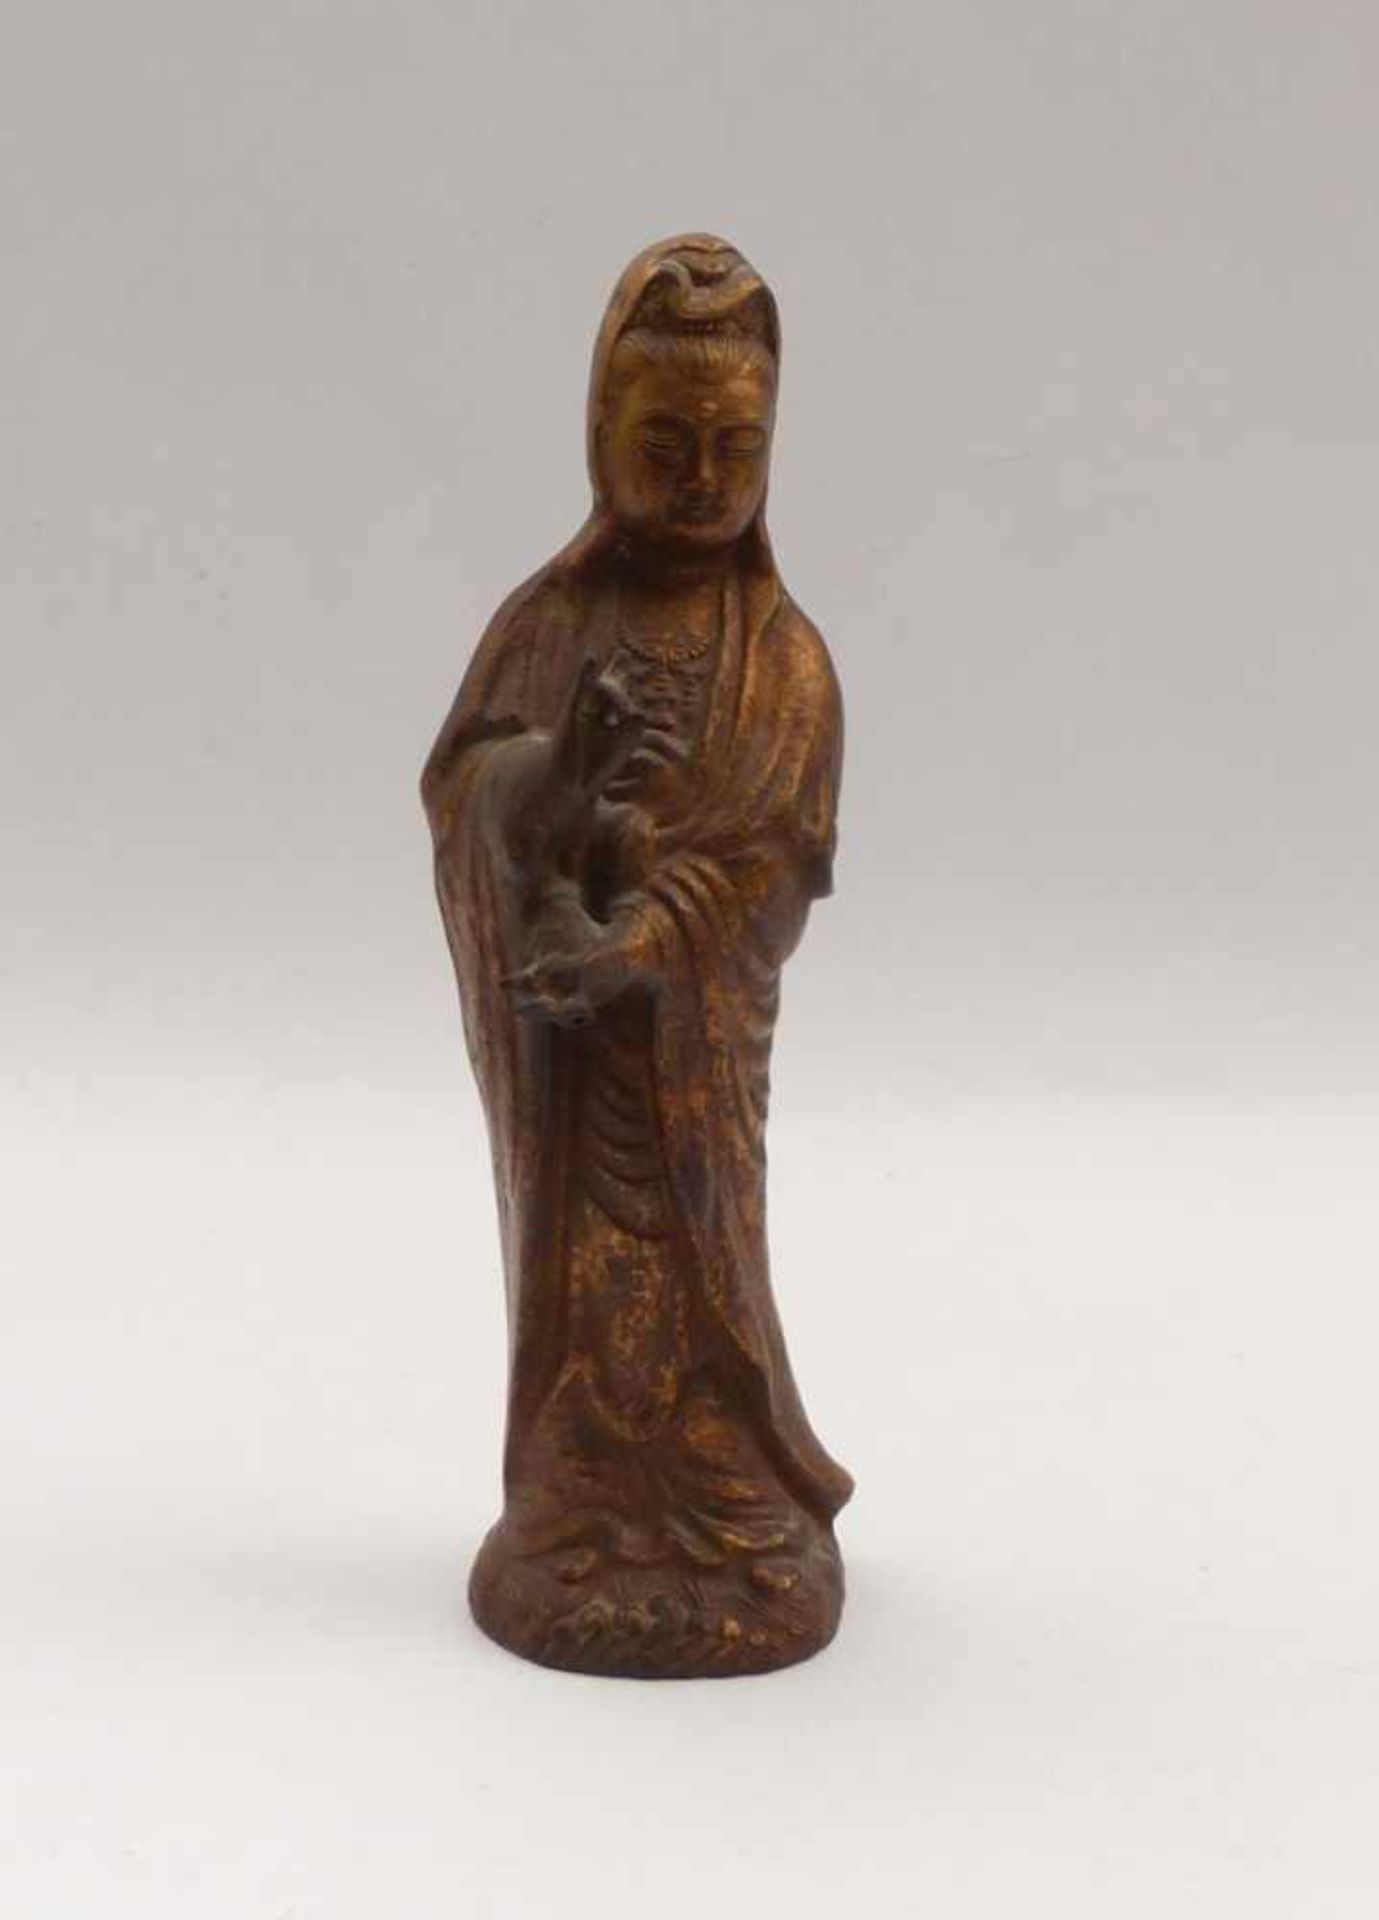 Bodhisattva Guanyin20th C.Metal. H. 29,5 cm.Standfigur der Bodhisattva Guanyin20. Jh.Metallguss,